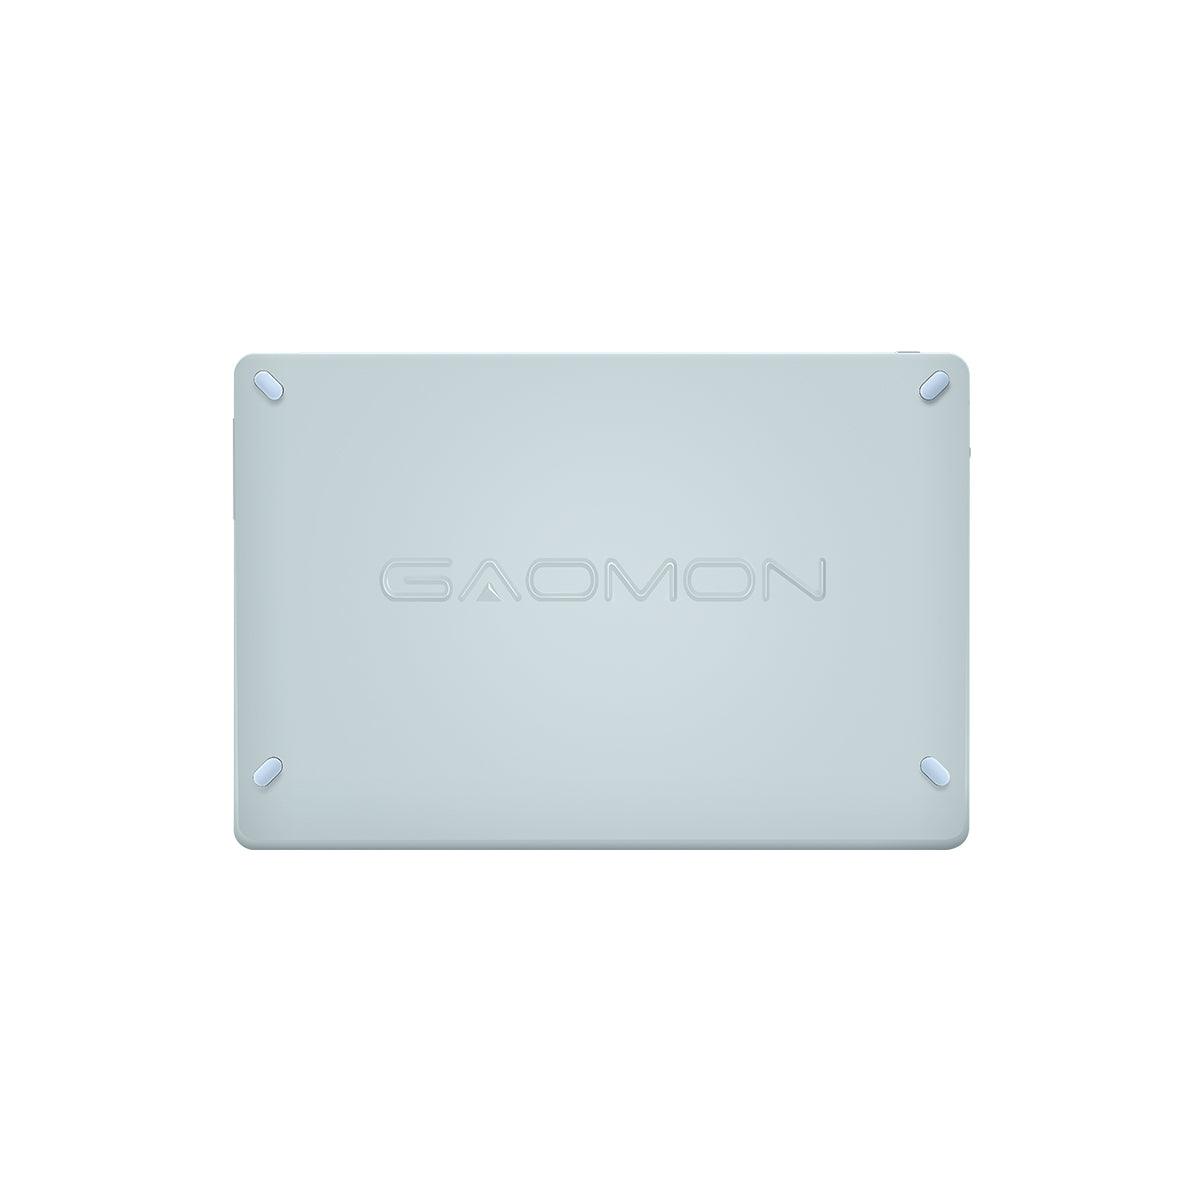 GAOMON - GAOMON PD1320 Pen Display